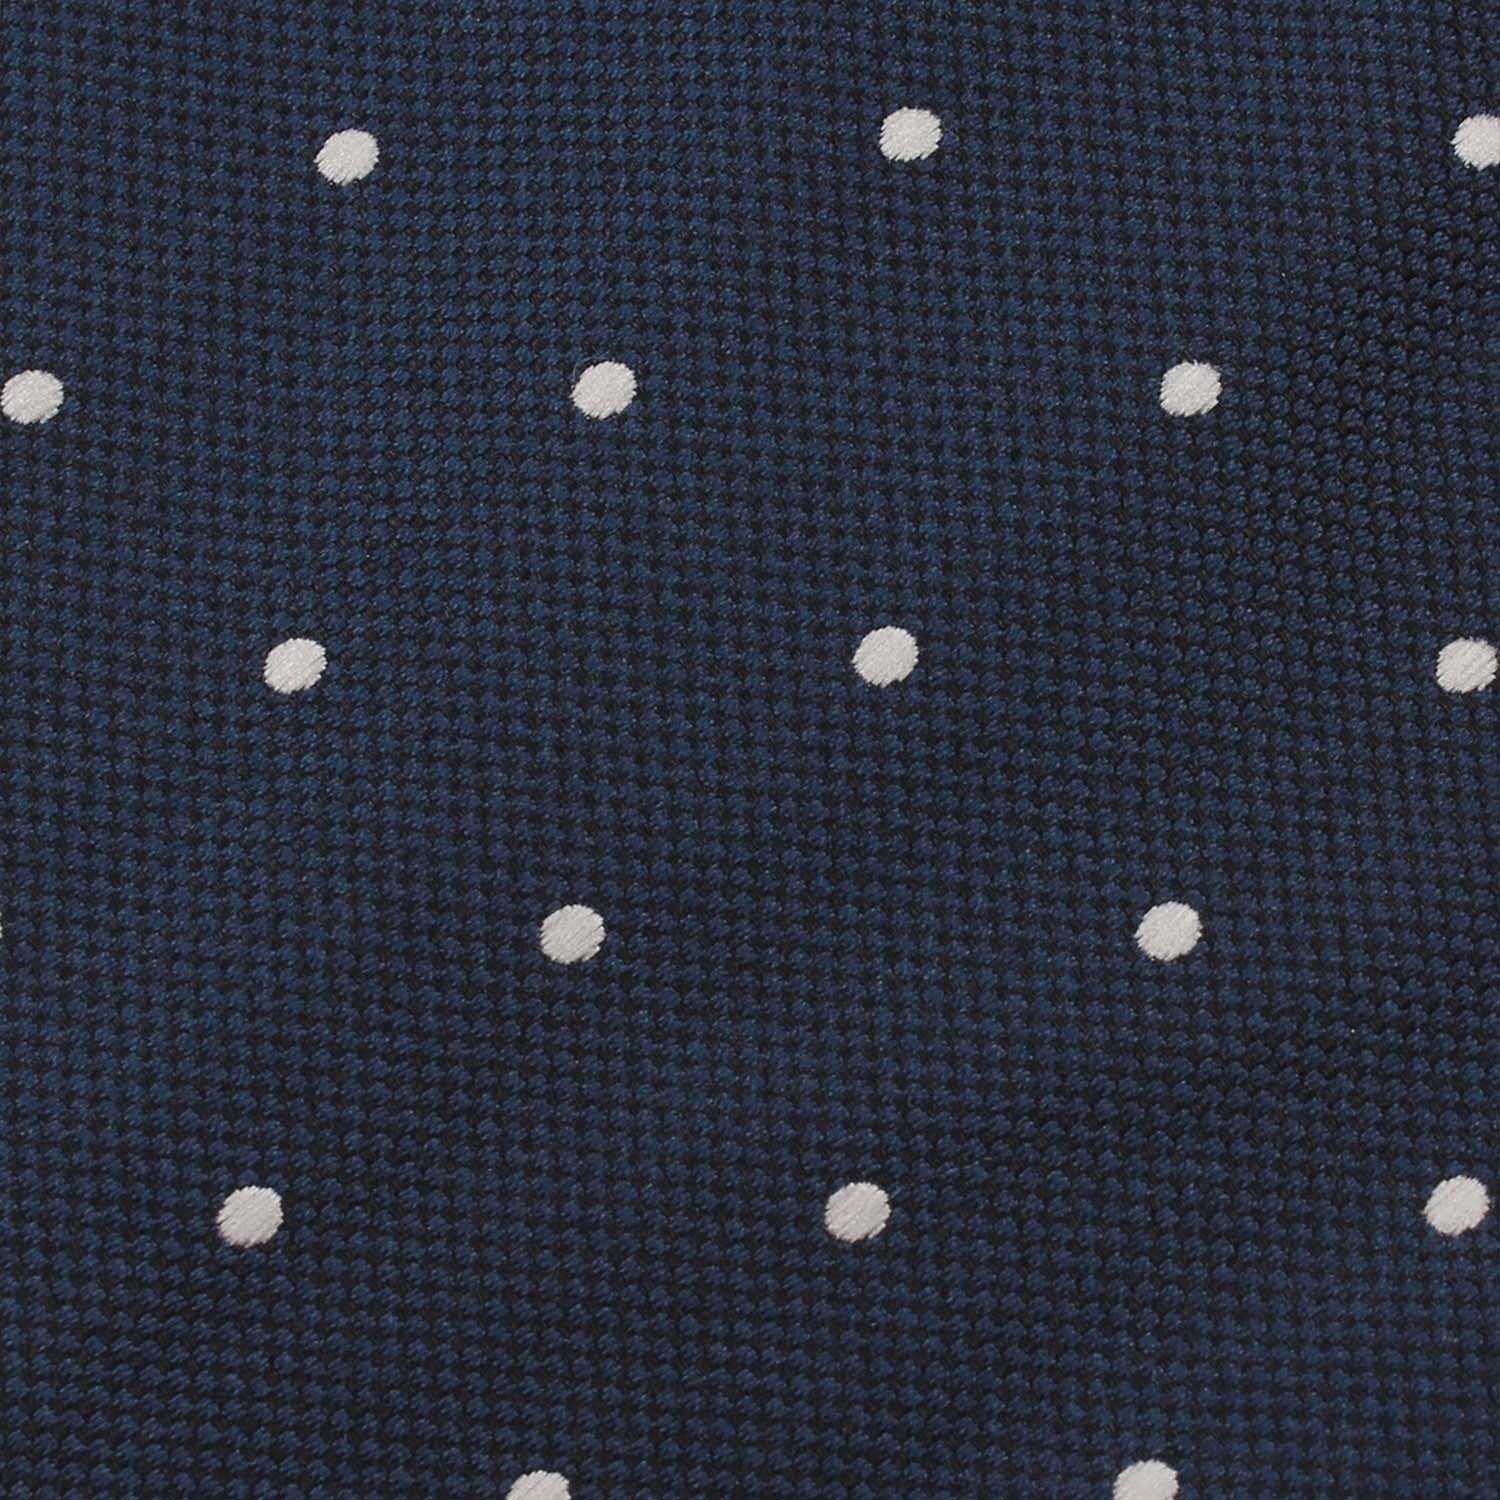 Navy Blue Polka Dots Fabric Self Tie Diamond Tip Bow TieX517